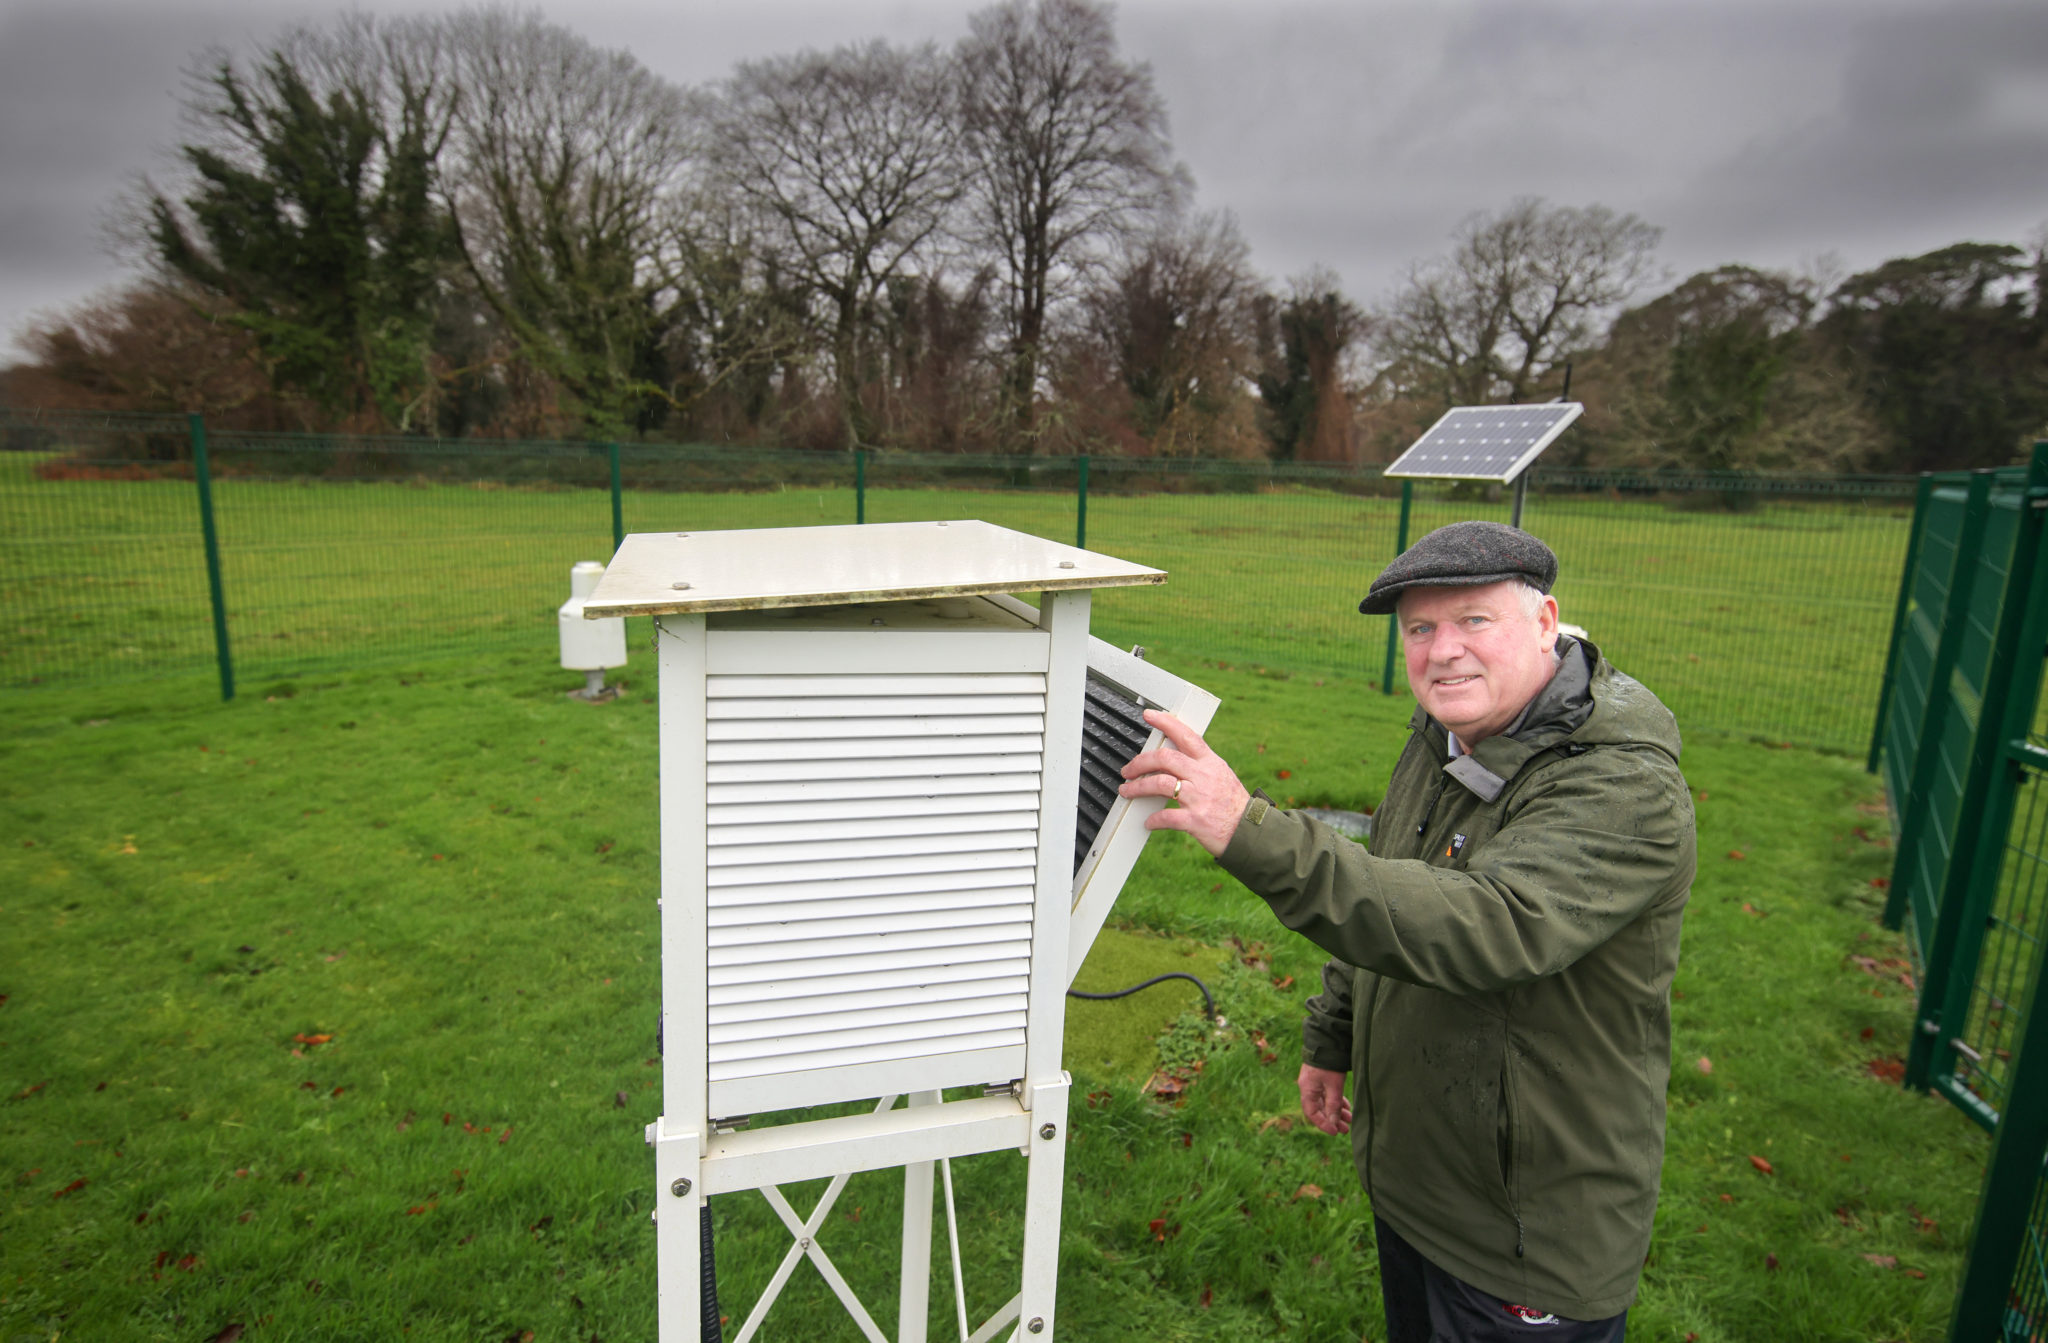 Muckross weather station marking 80 years measuring rainfall